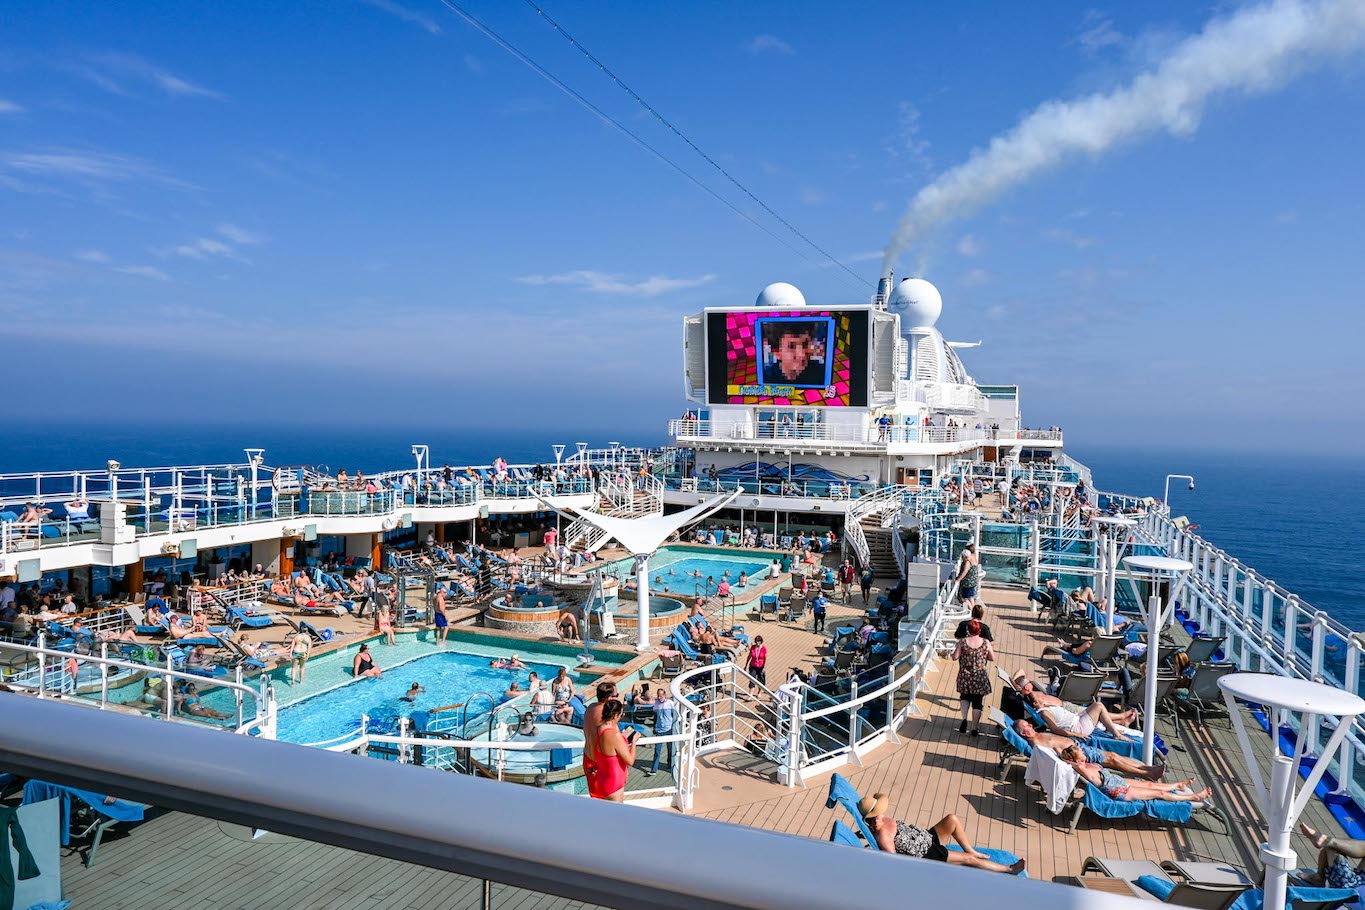 Princess Cruises from Southampton, main pool area